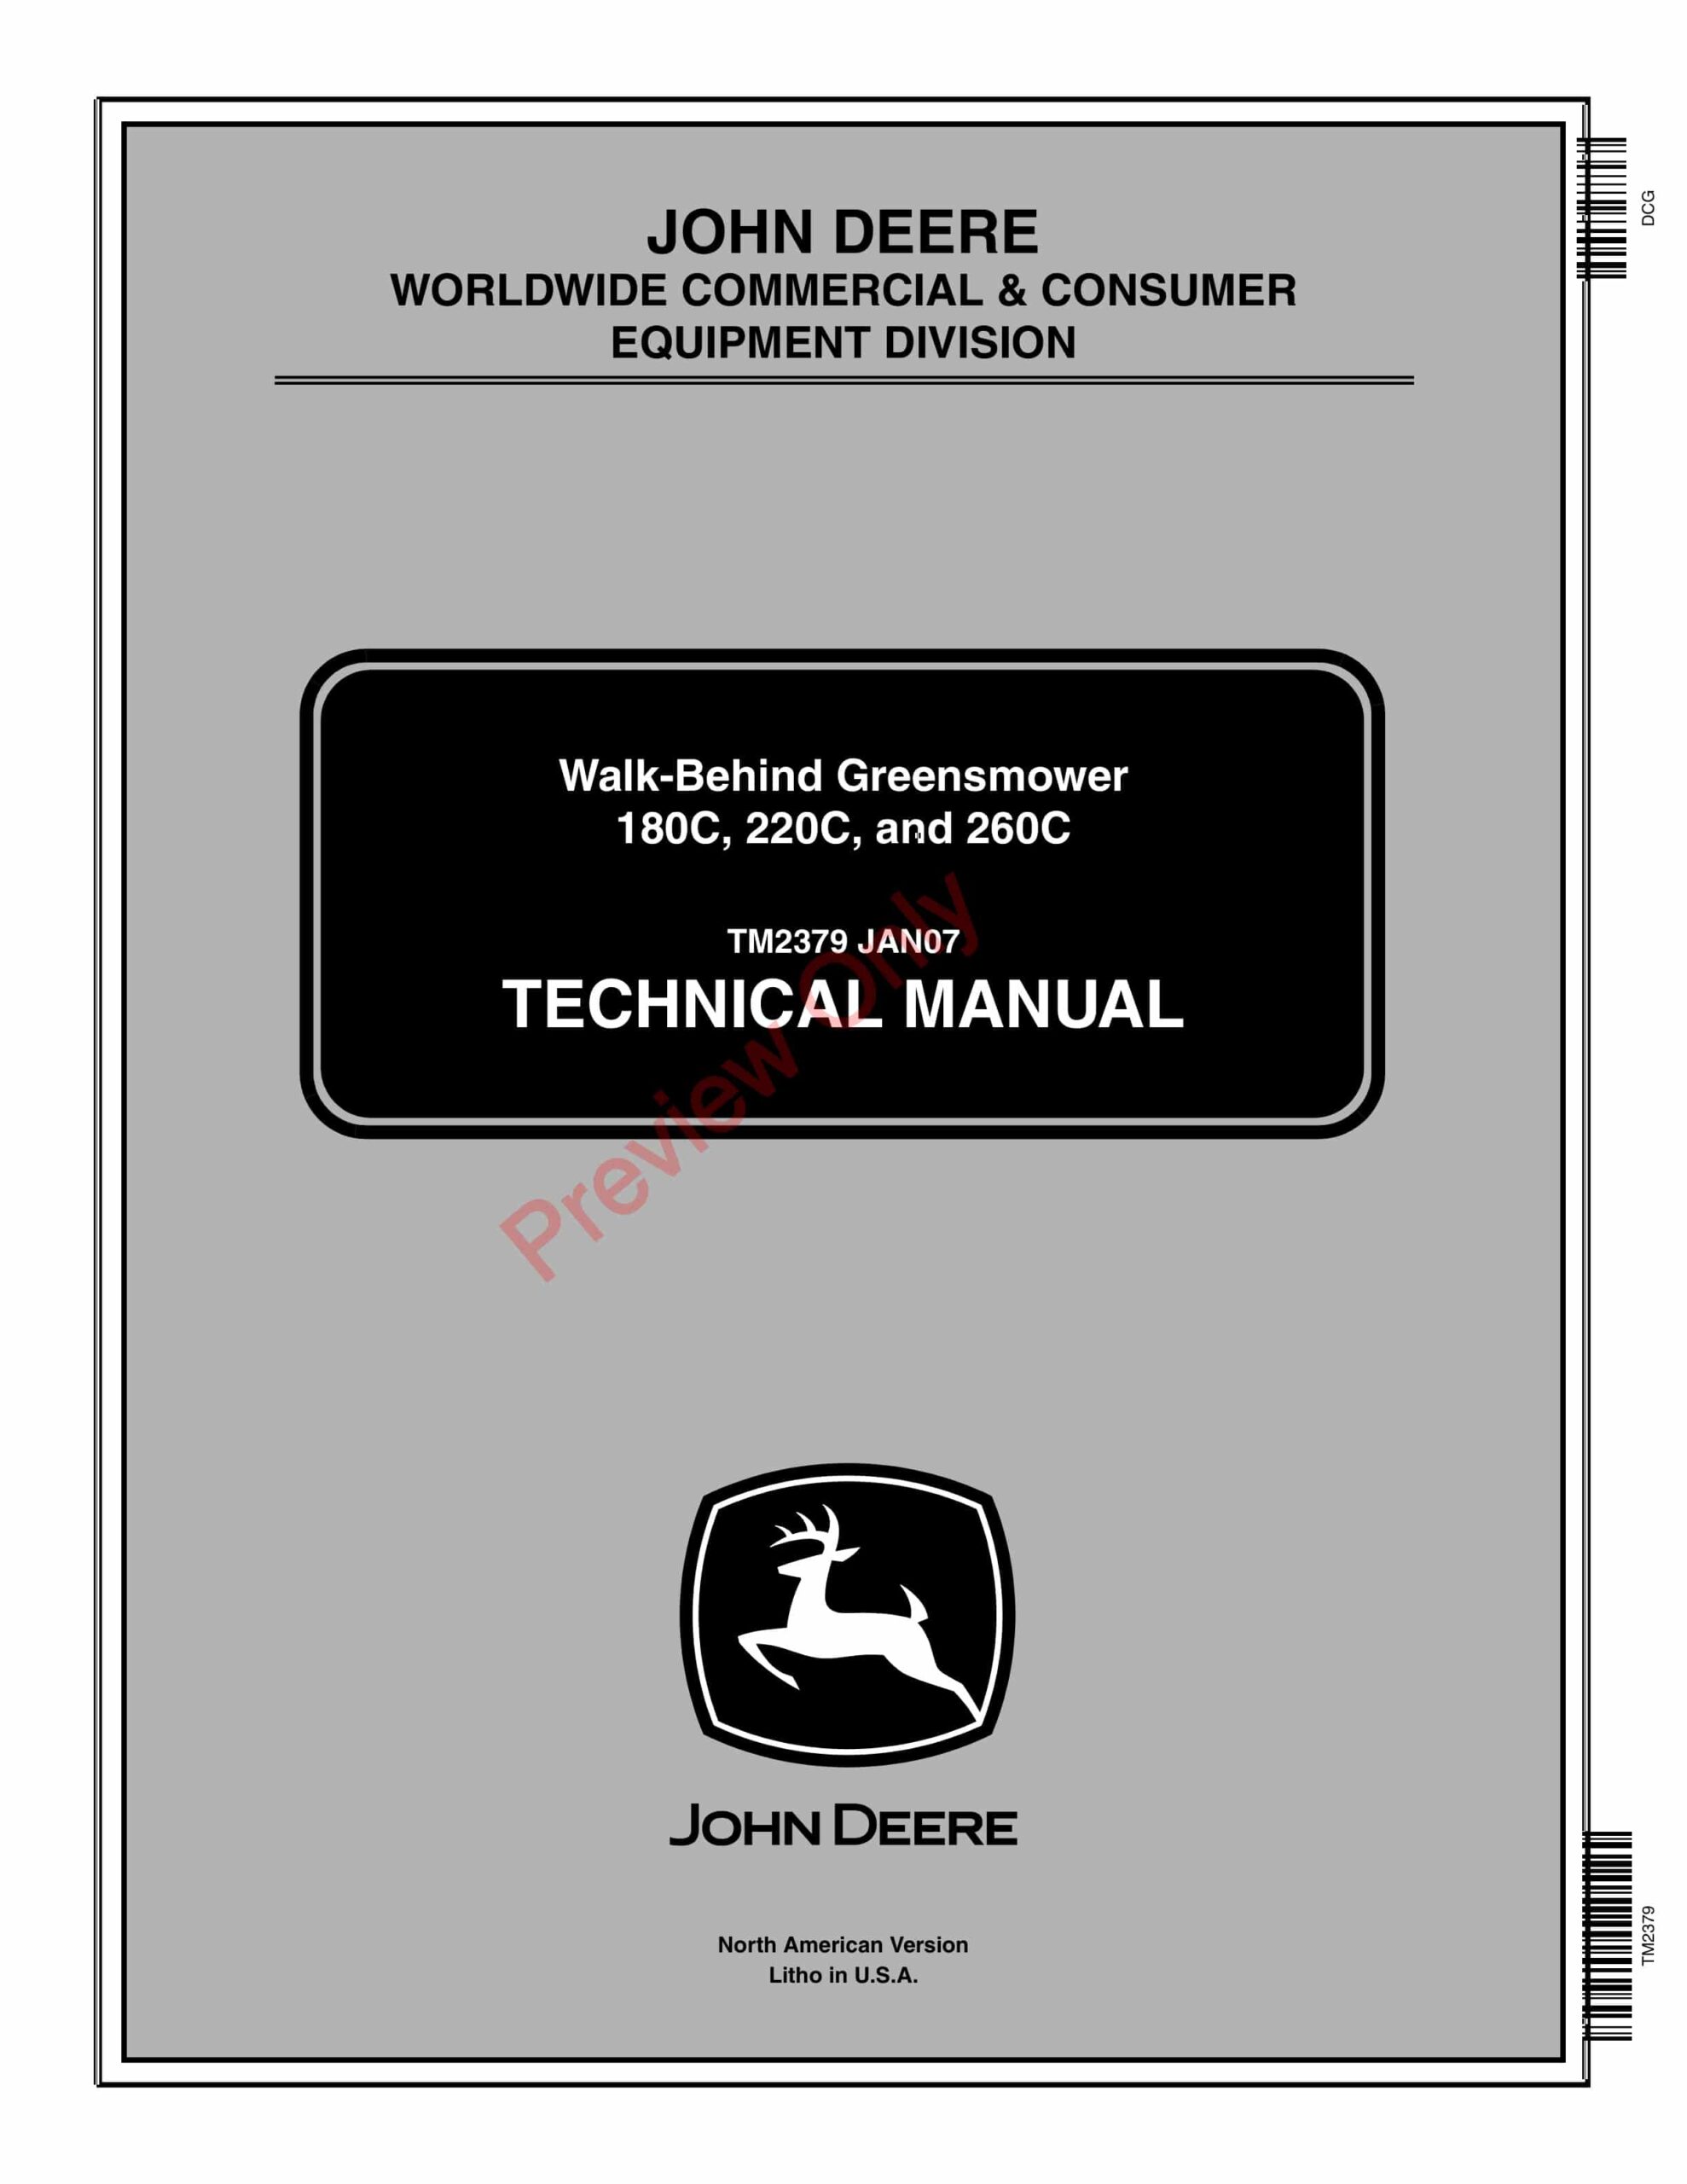 John Deere 180C, 220C, 260C Walk-Behind Greensmower Technical Manual TM2379 01JAN07-1